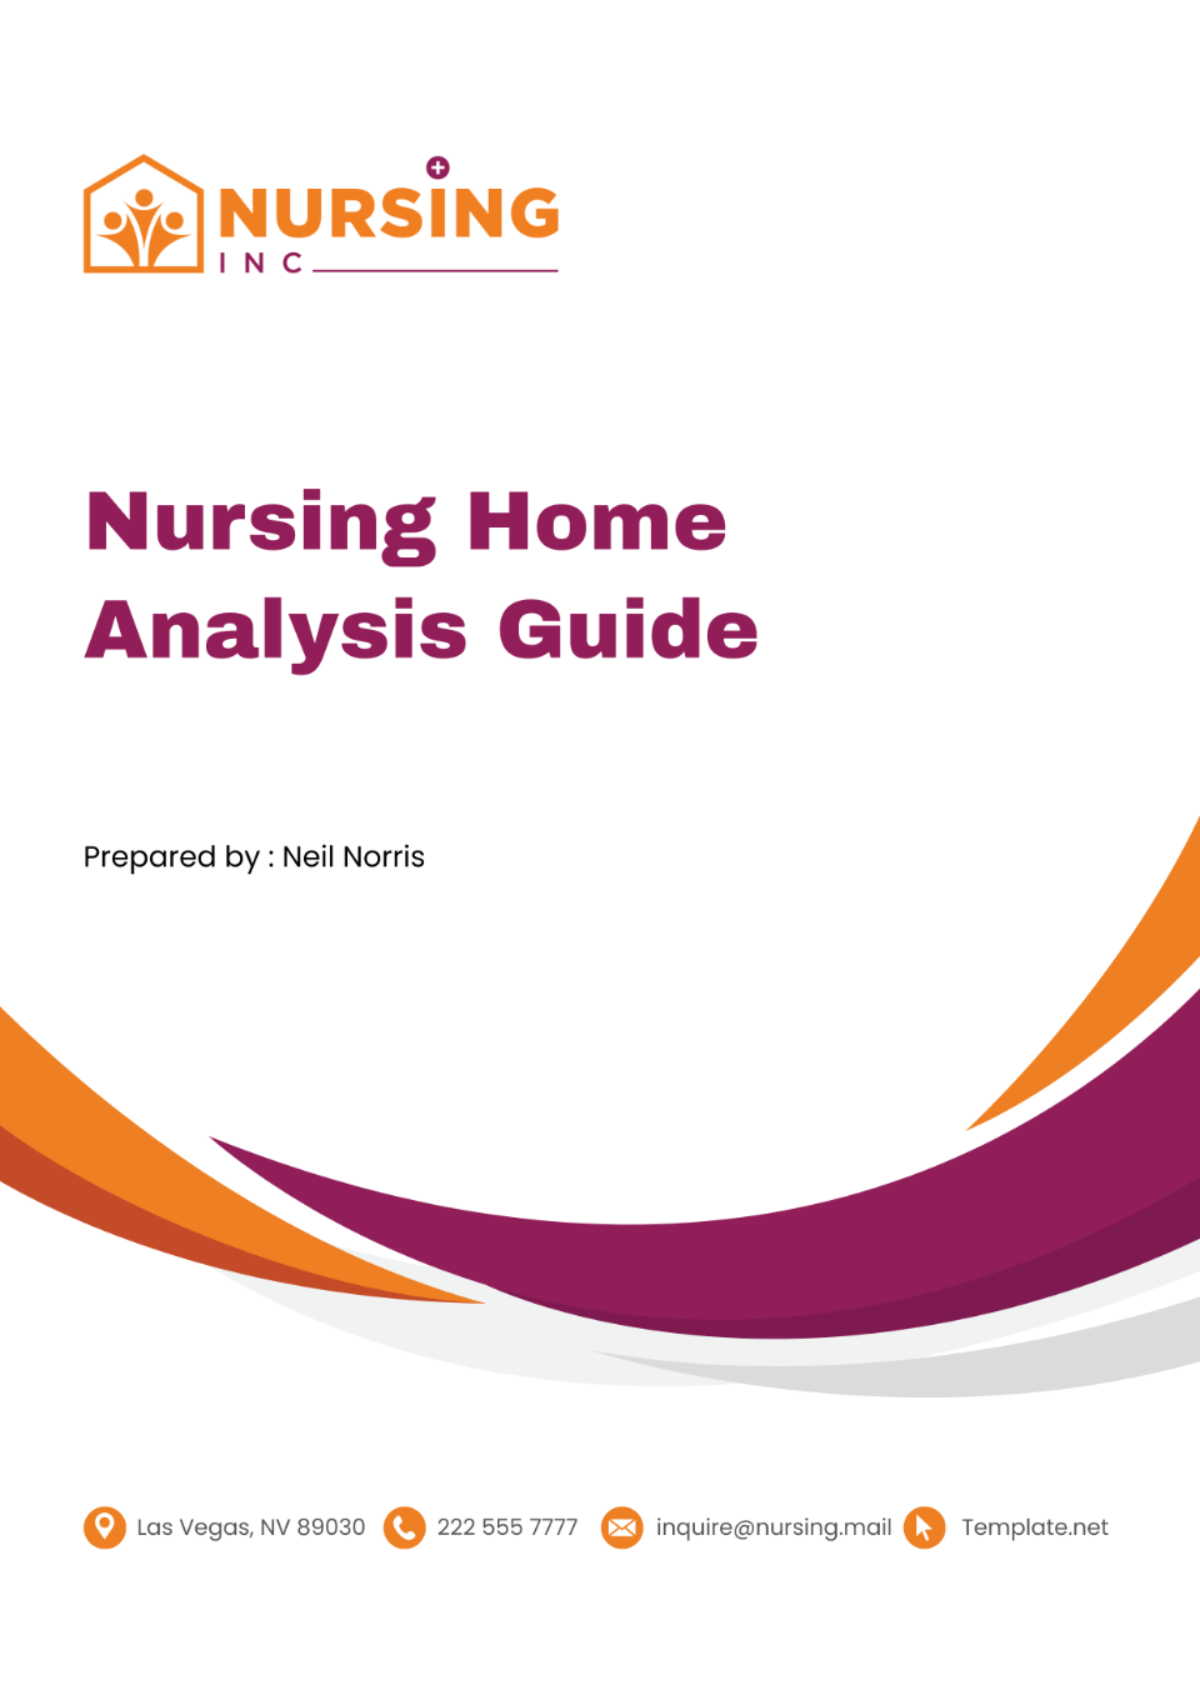 Nursing Home Analysis Guide Template